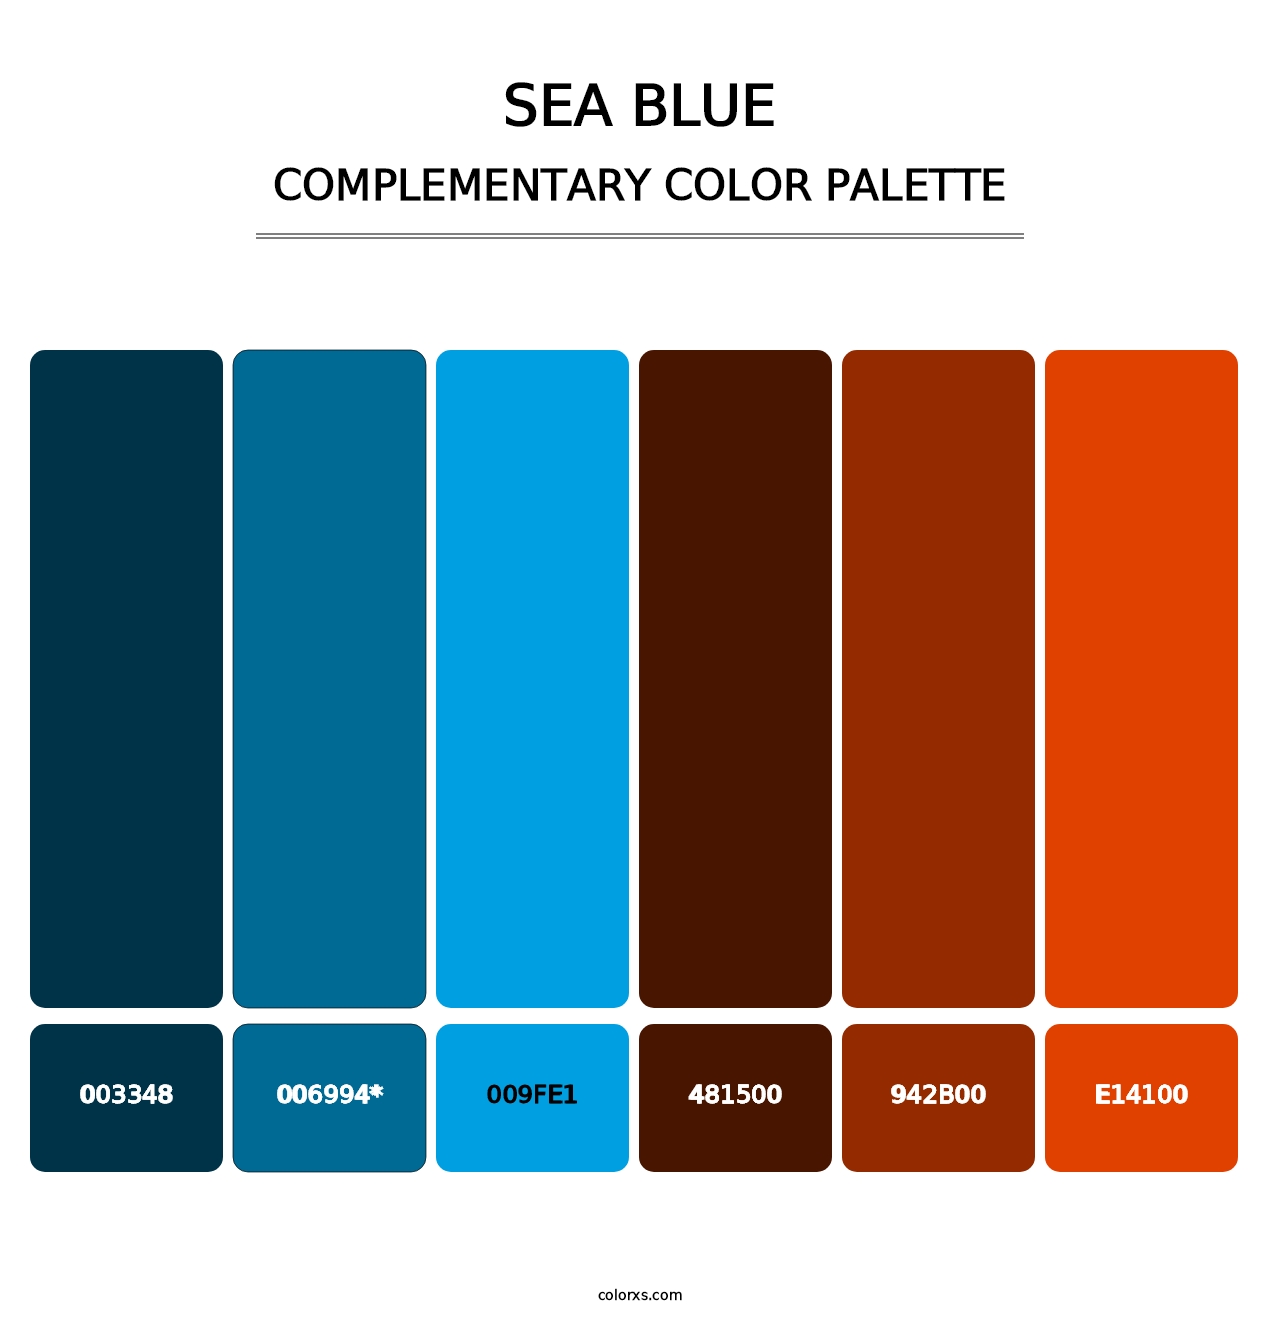 Sea Blue - Complementary Color Palette